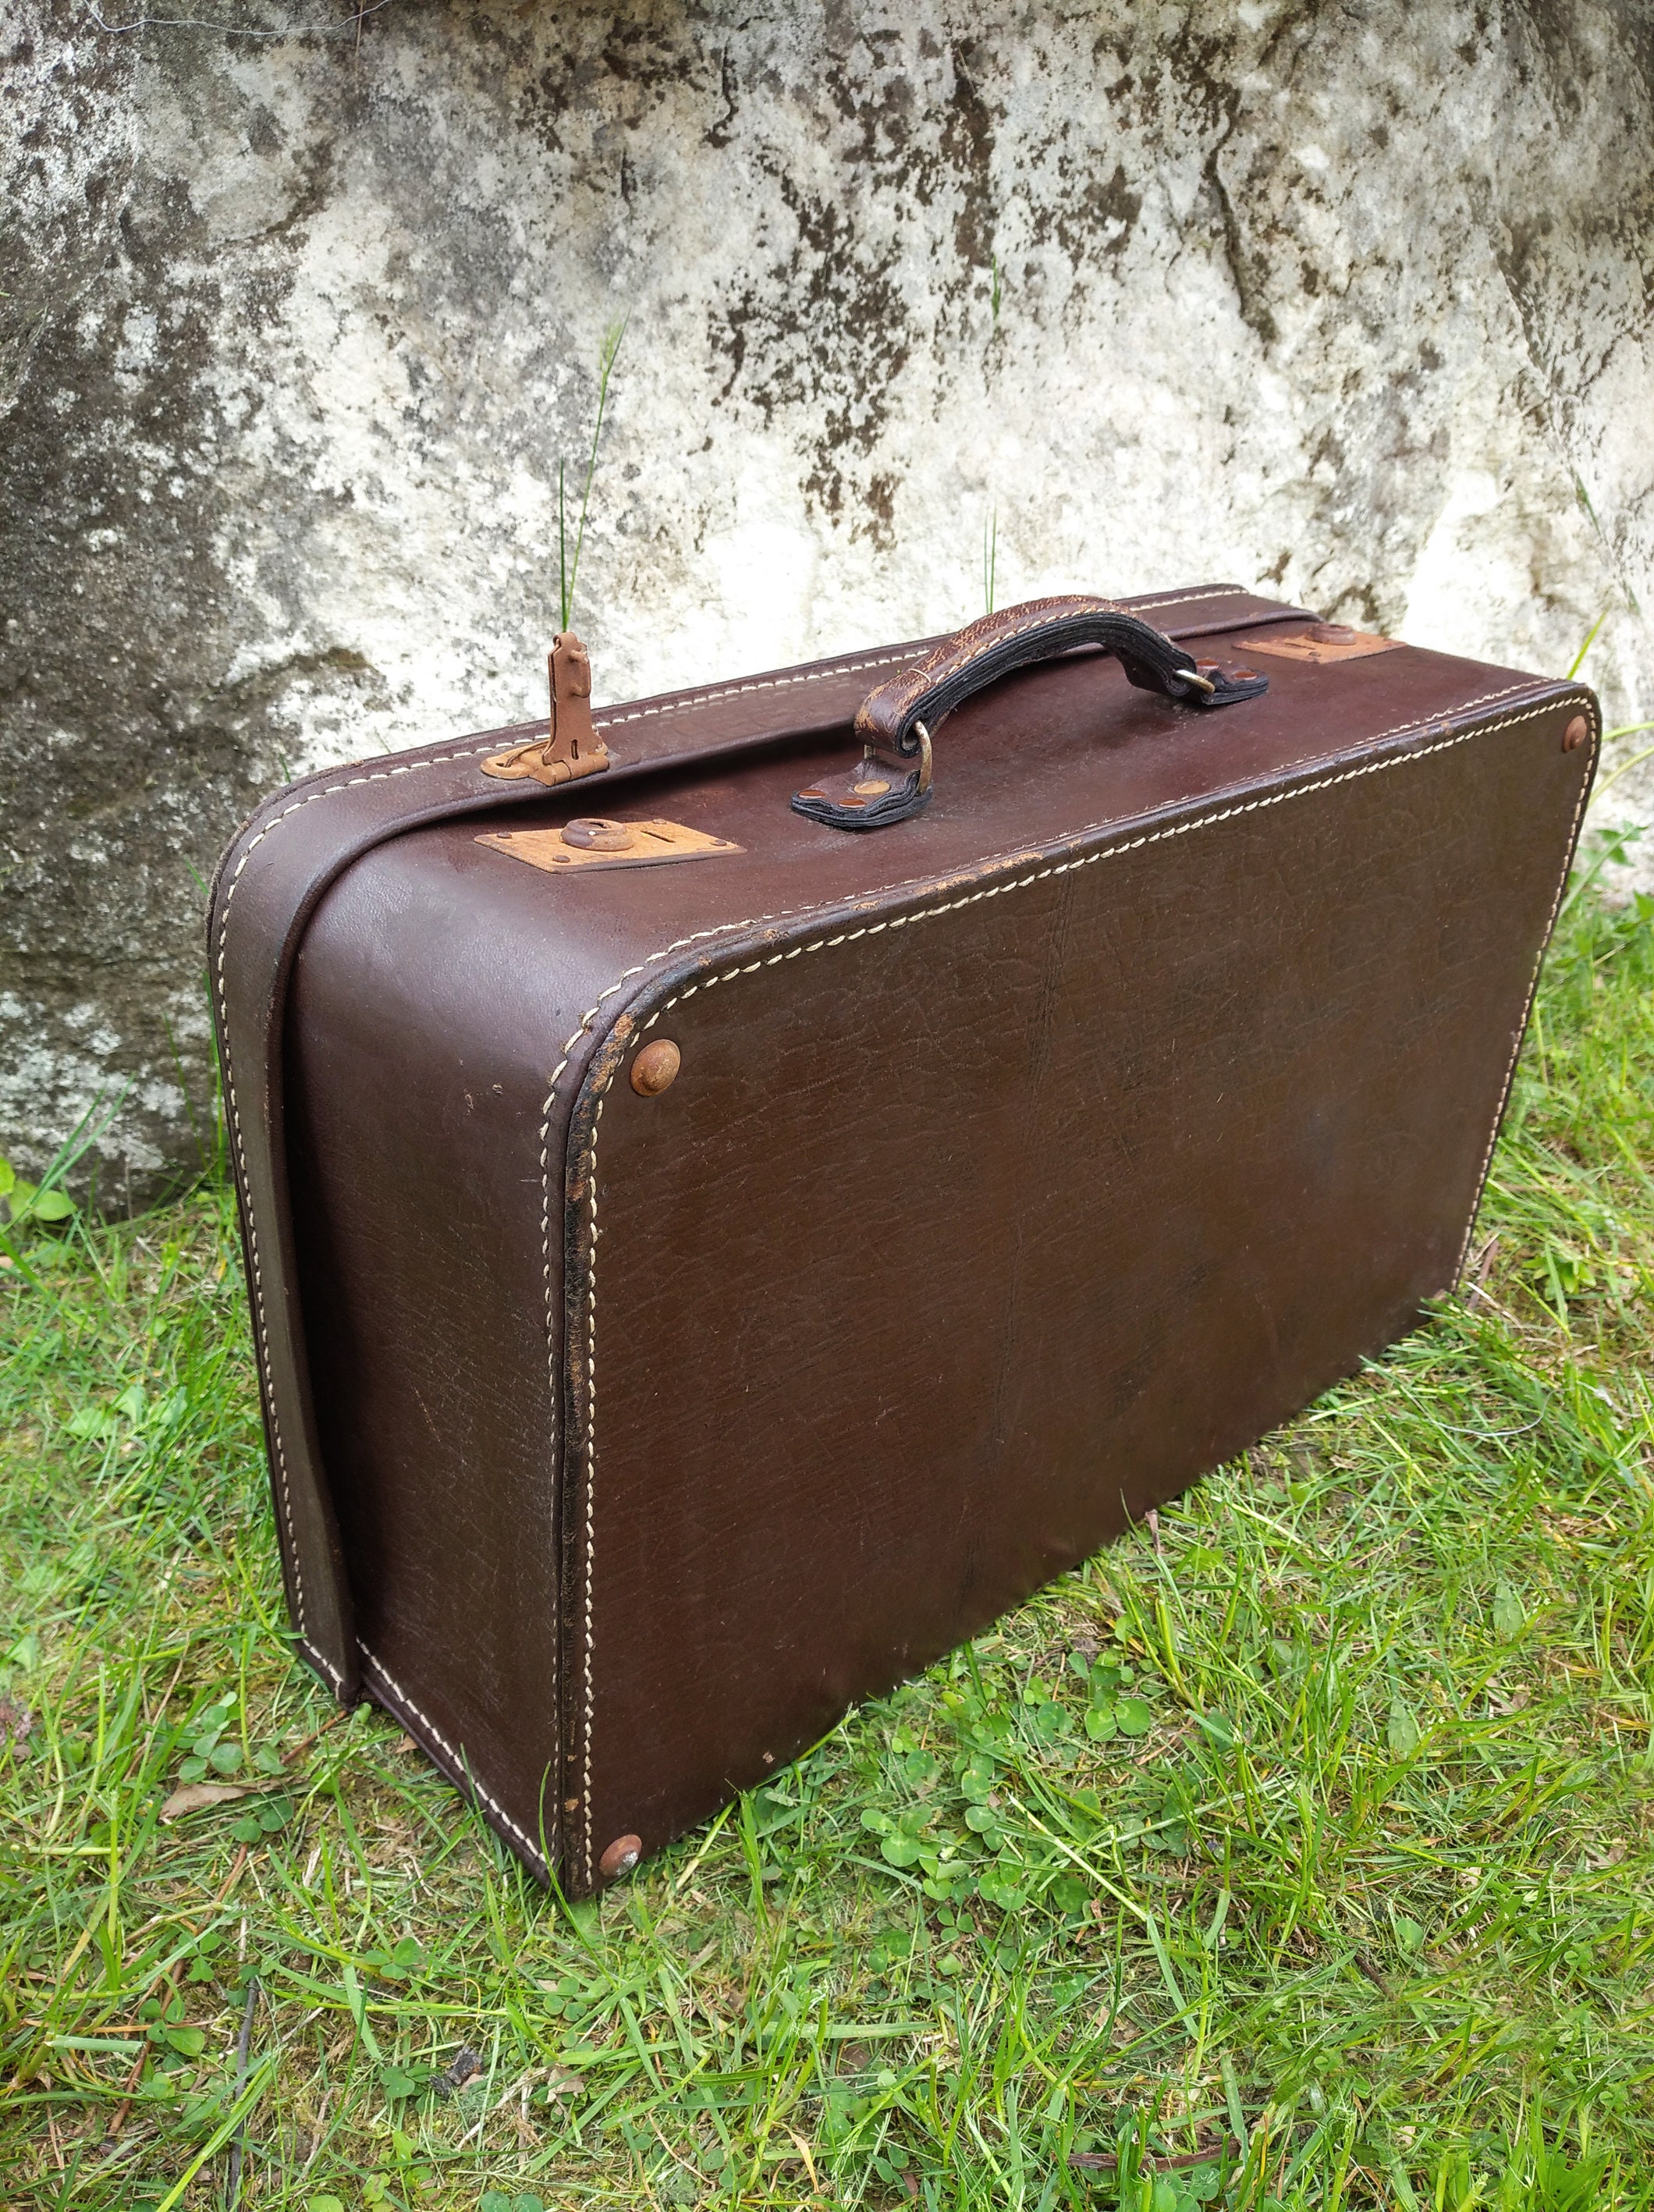 Set Of 3 1920's Vintage Leather Suitcases, 1stdibs.com